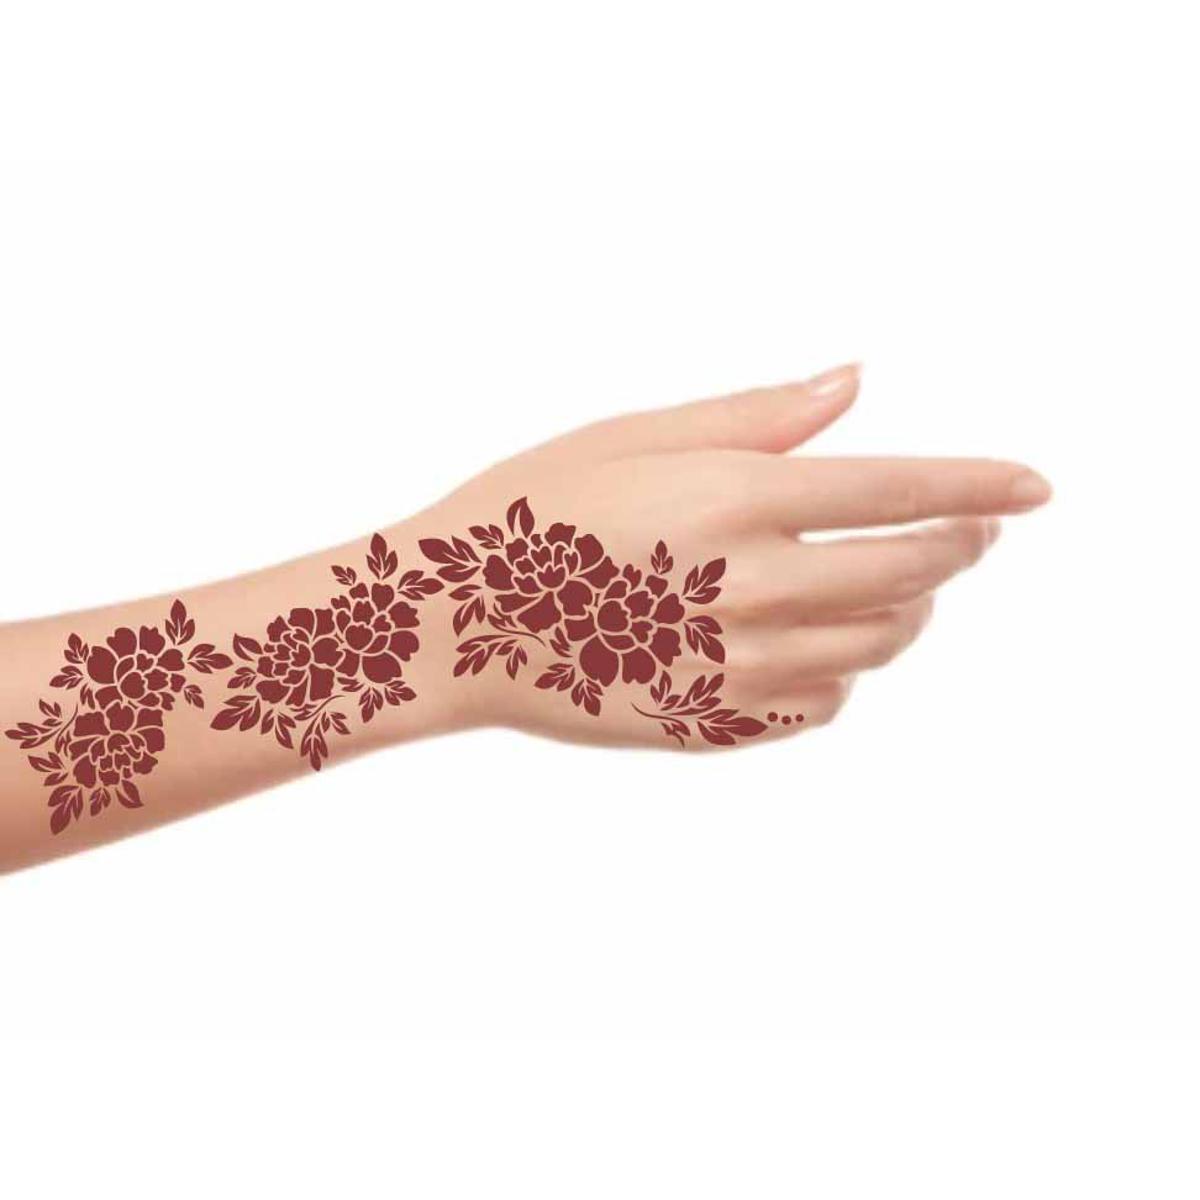 Xmasir 6 Sheets India Henna Tattoo Stencil Kit for Women Girl Hand Art  Painting Temporary Tattoo Sticker Glitter Templates 7.87'' x 4''